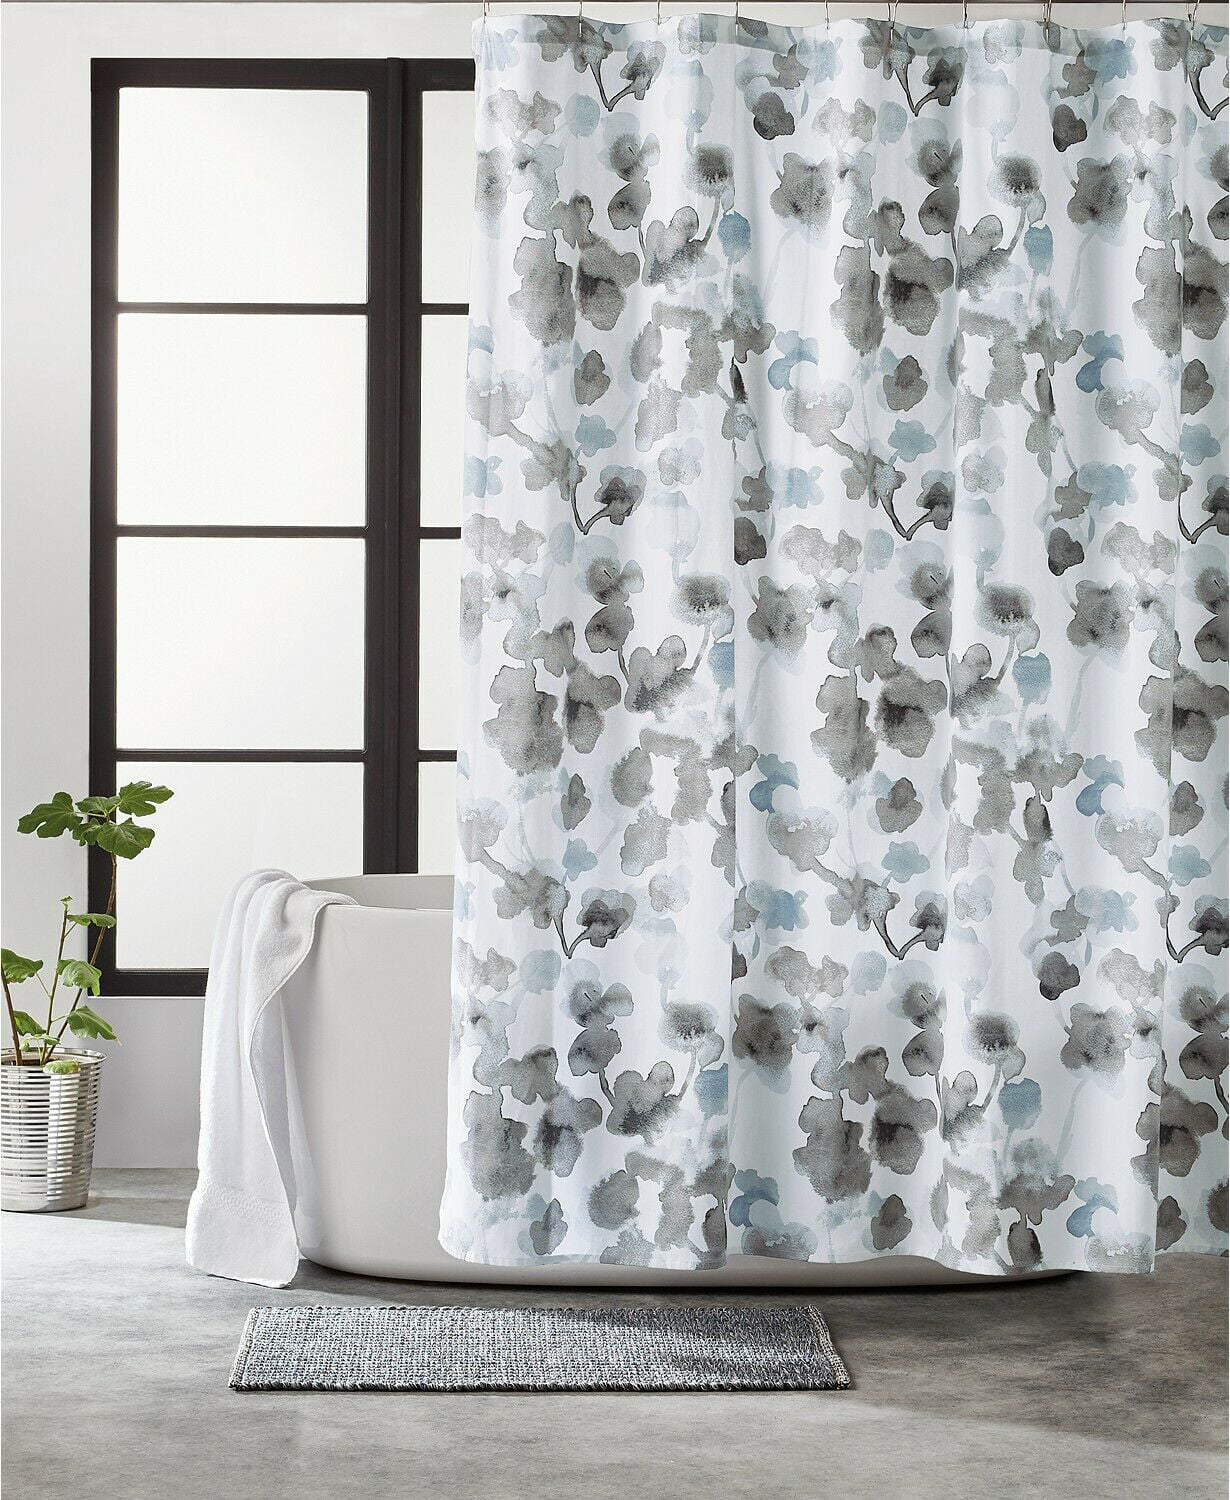 DKNY Graphic Lace Shower Curtain  Glacier Blue Aqua on Whte 72 x 72 